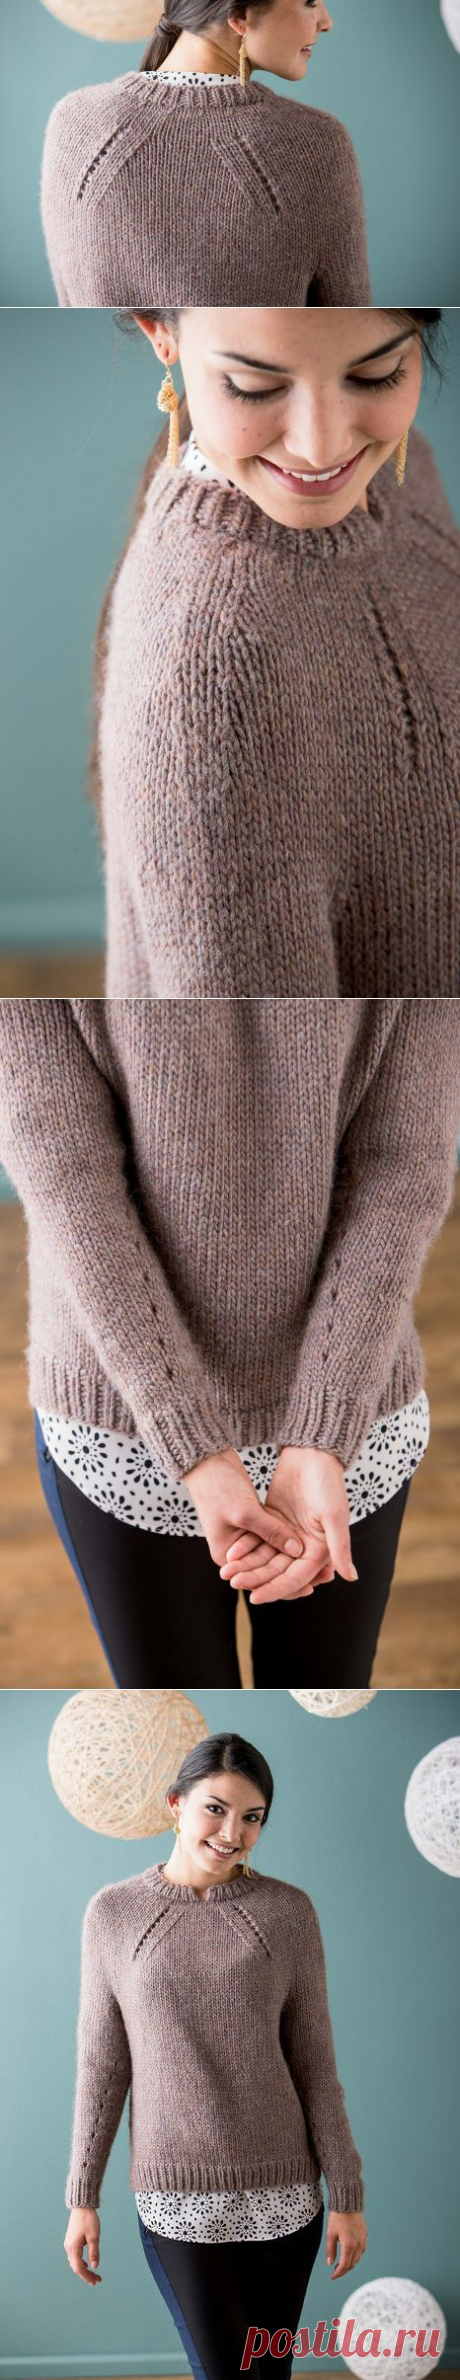 Пуловер Shifted Eyelet Yoke, Knit Purl, осень-зима (fall/winter) 2014